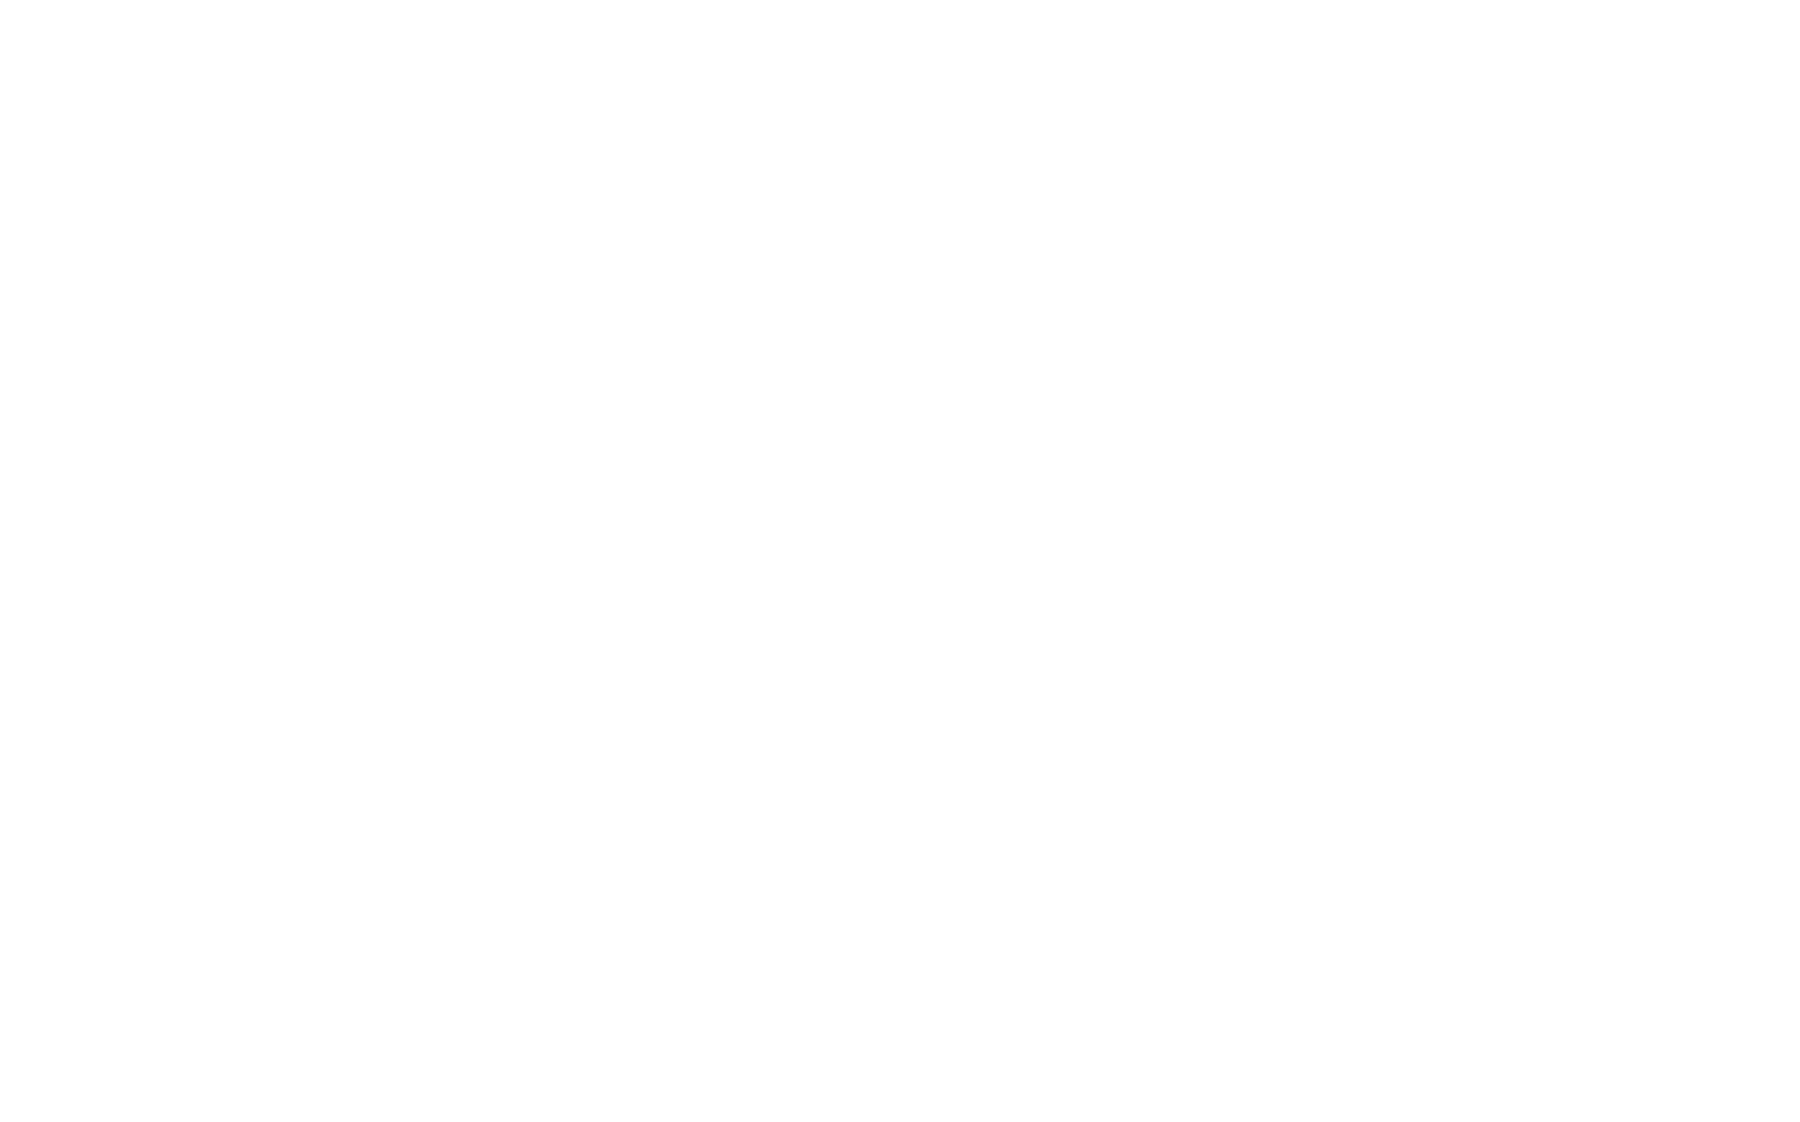 1-güncel The Biker Jeans - Logo.png (135 KB)